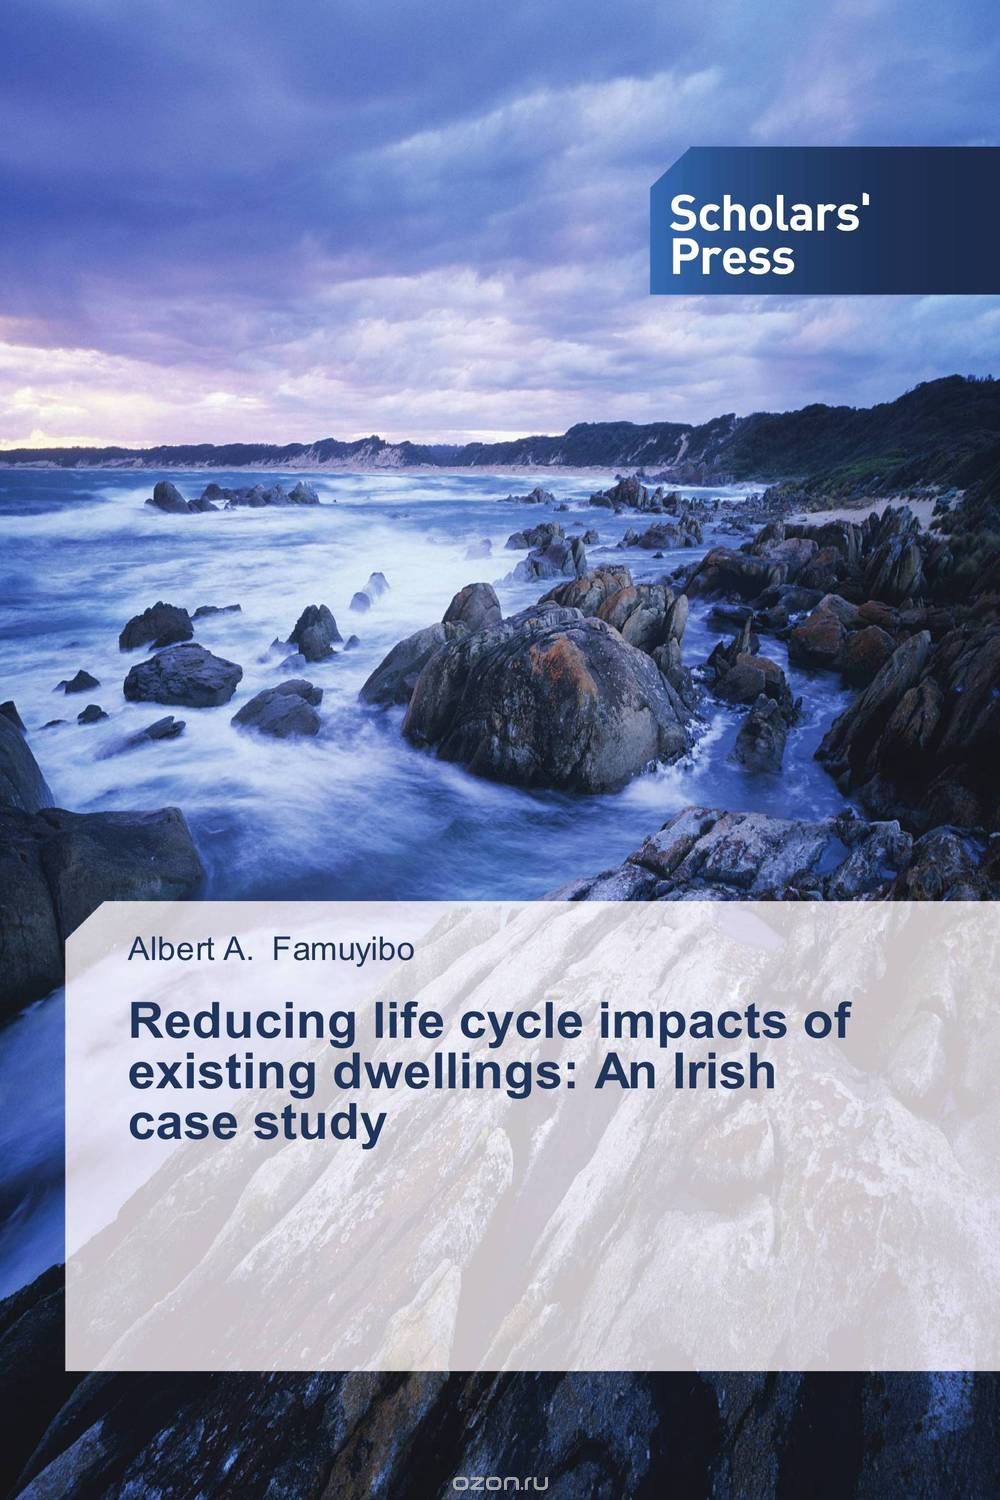 Скачать книгу "Reducing life cycle impacts of existing dwellings: An Irish case study"